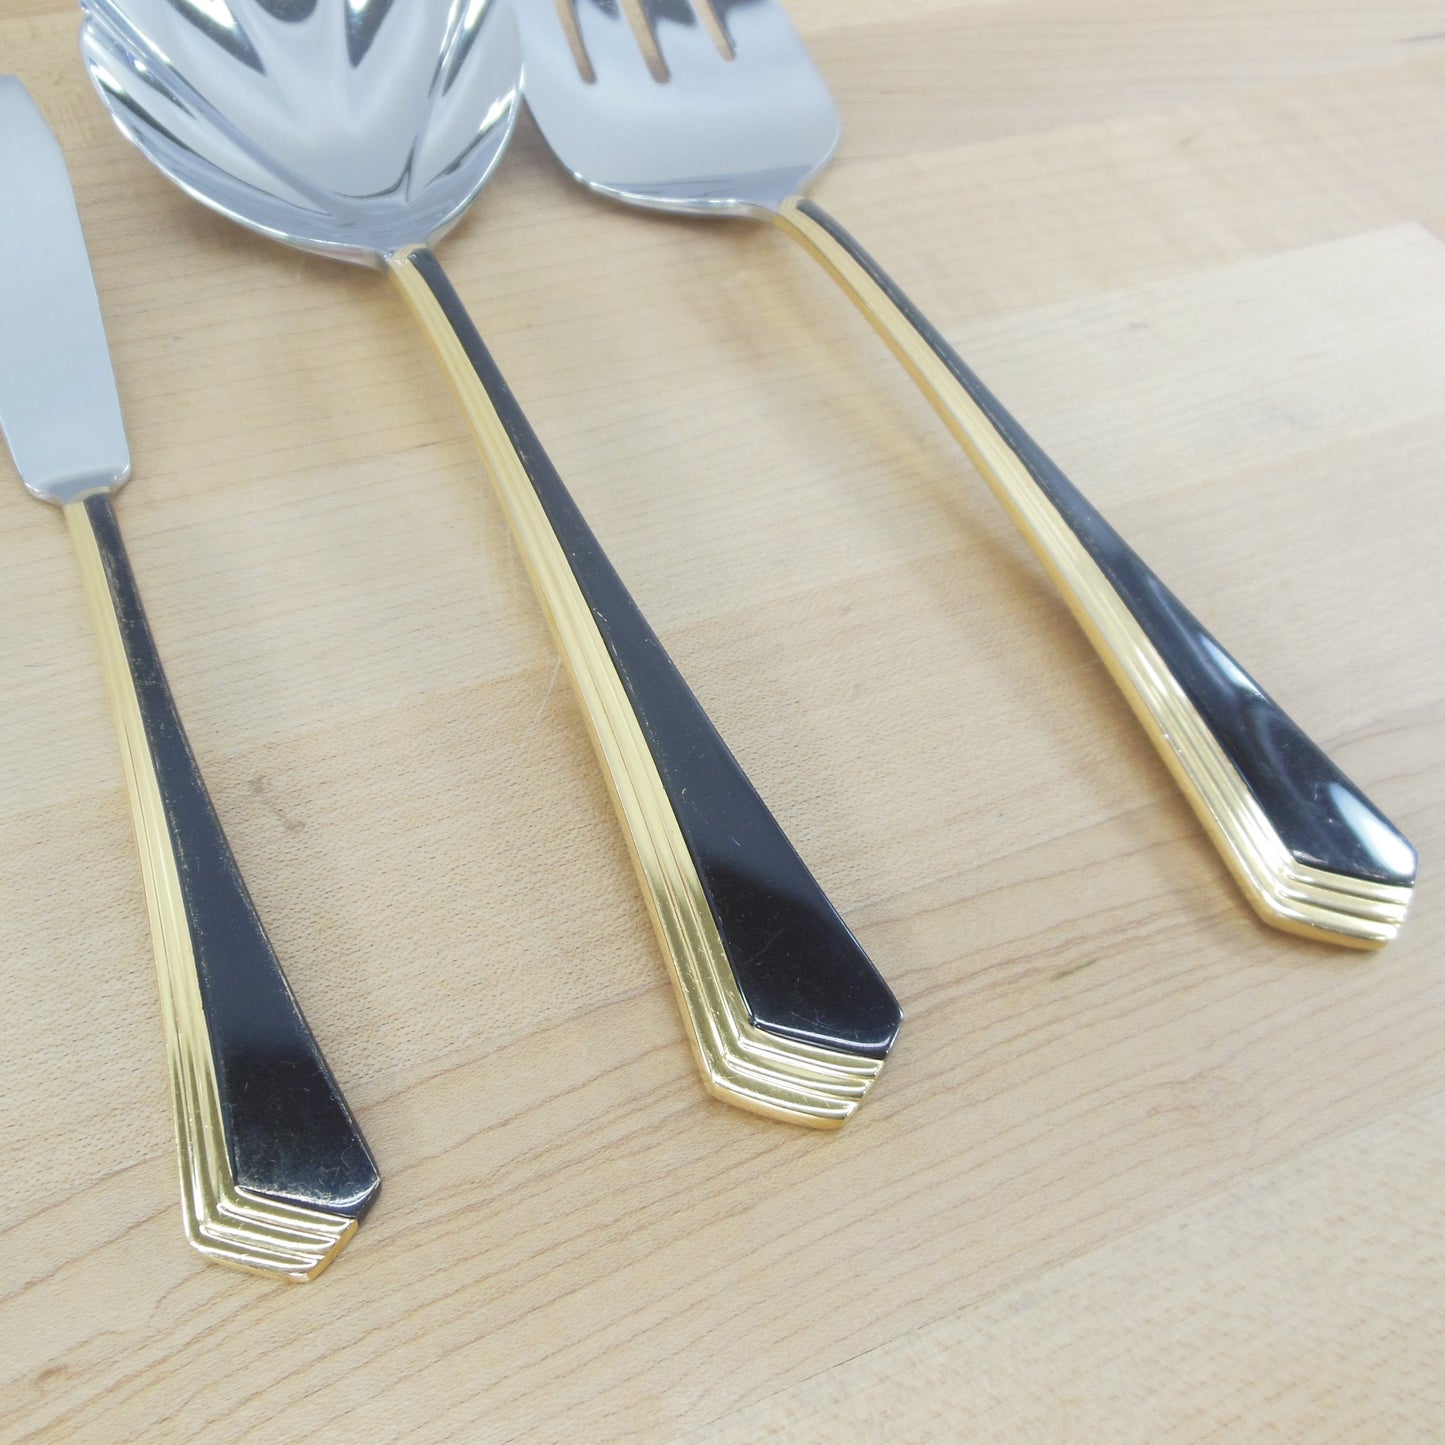 Yamazaki Japan Ramona Black Gold Stainless - Serving Fork Spoon Master Butter Knife